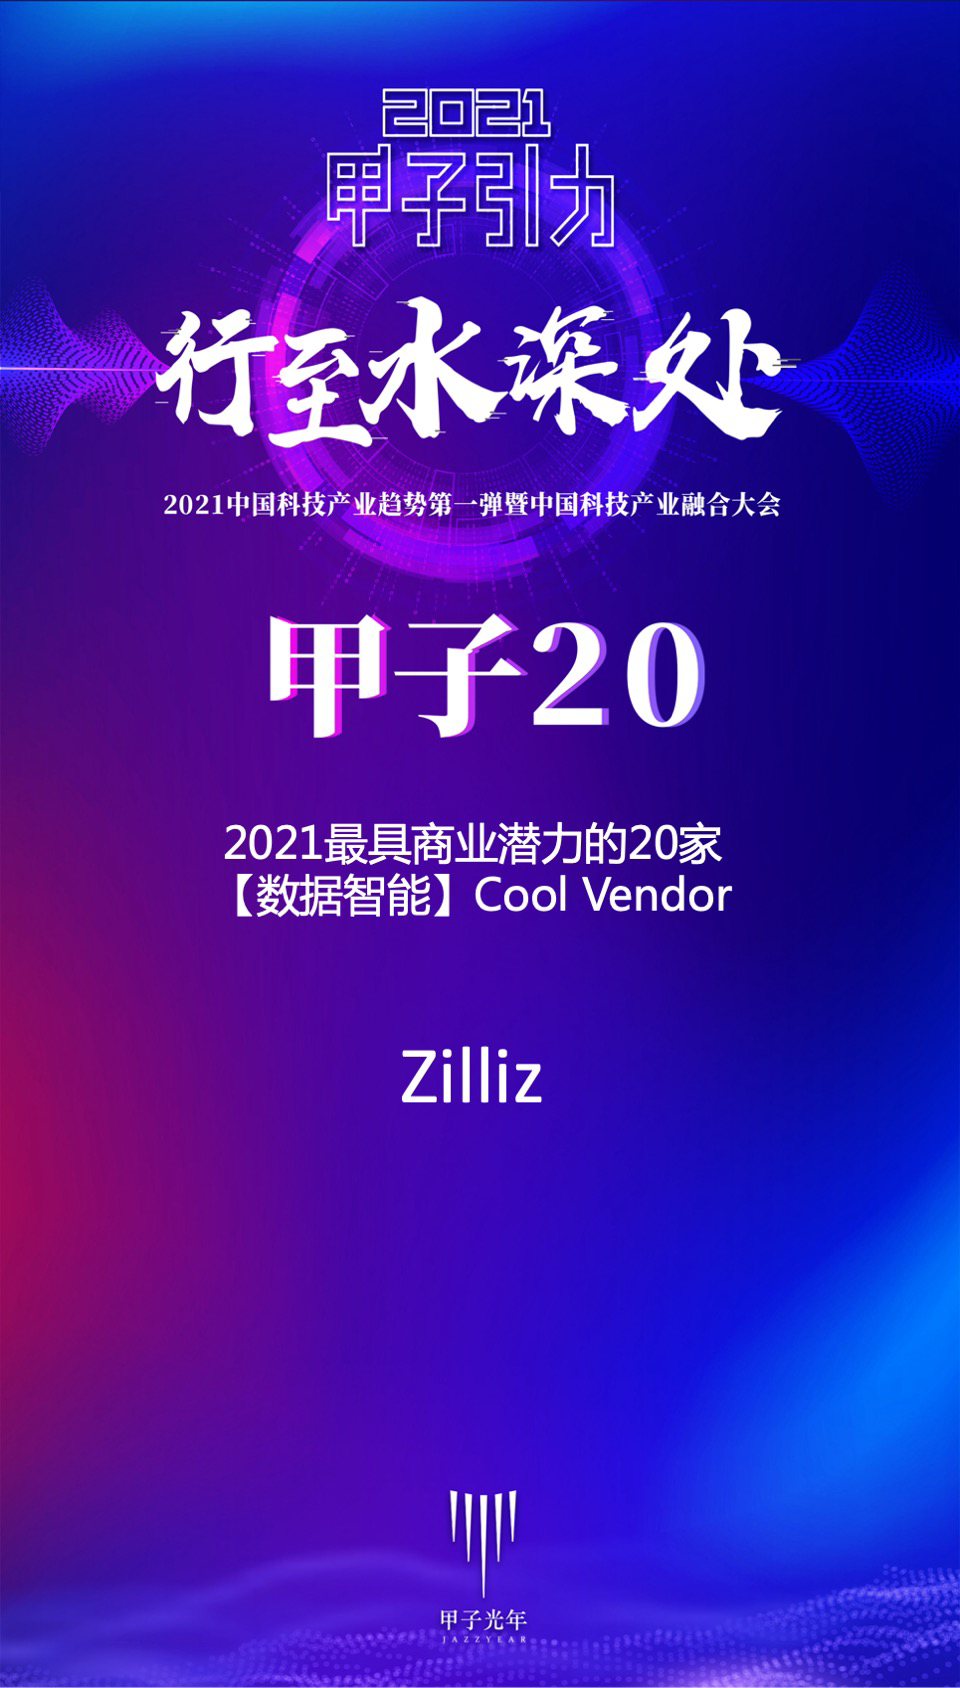 Zilliz 上榜甲子光年「2021 中国最具商业潜力的20 家数据智能 Cool Vendor」